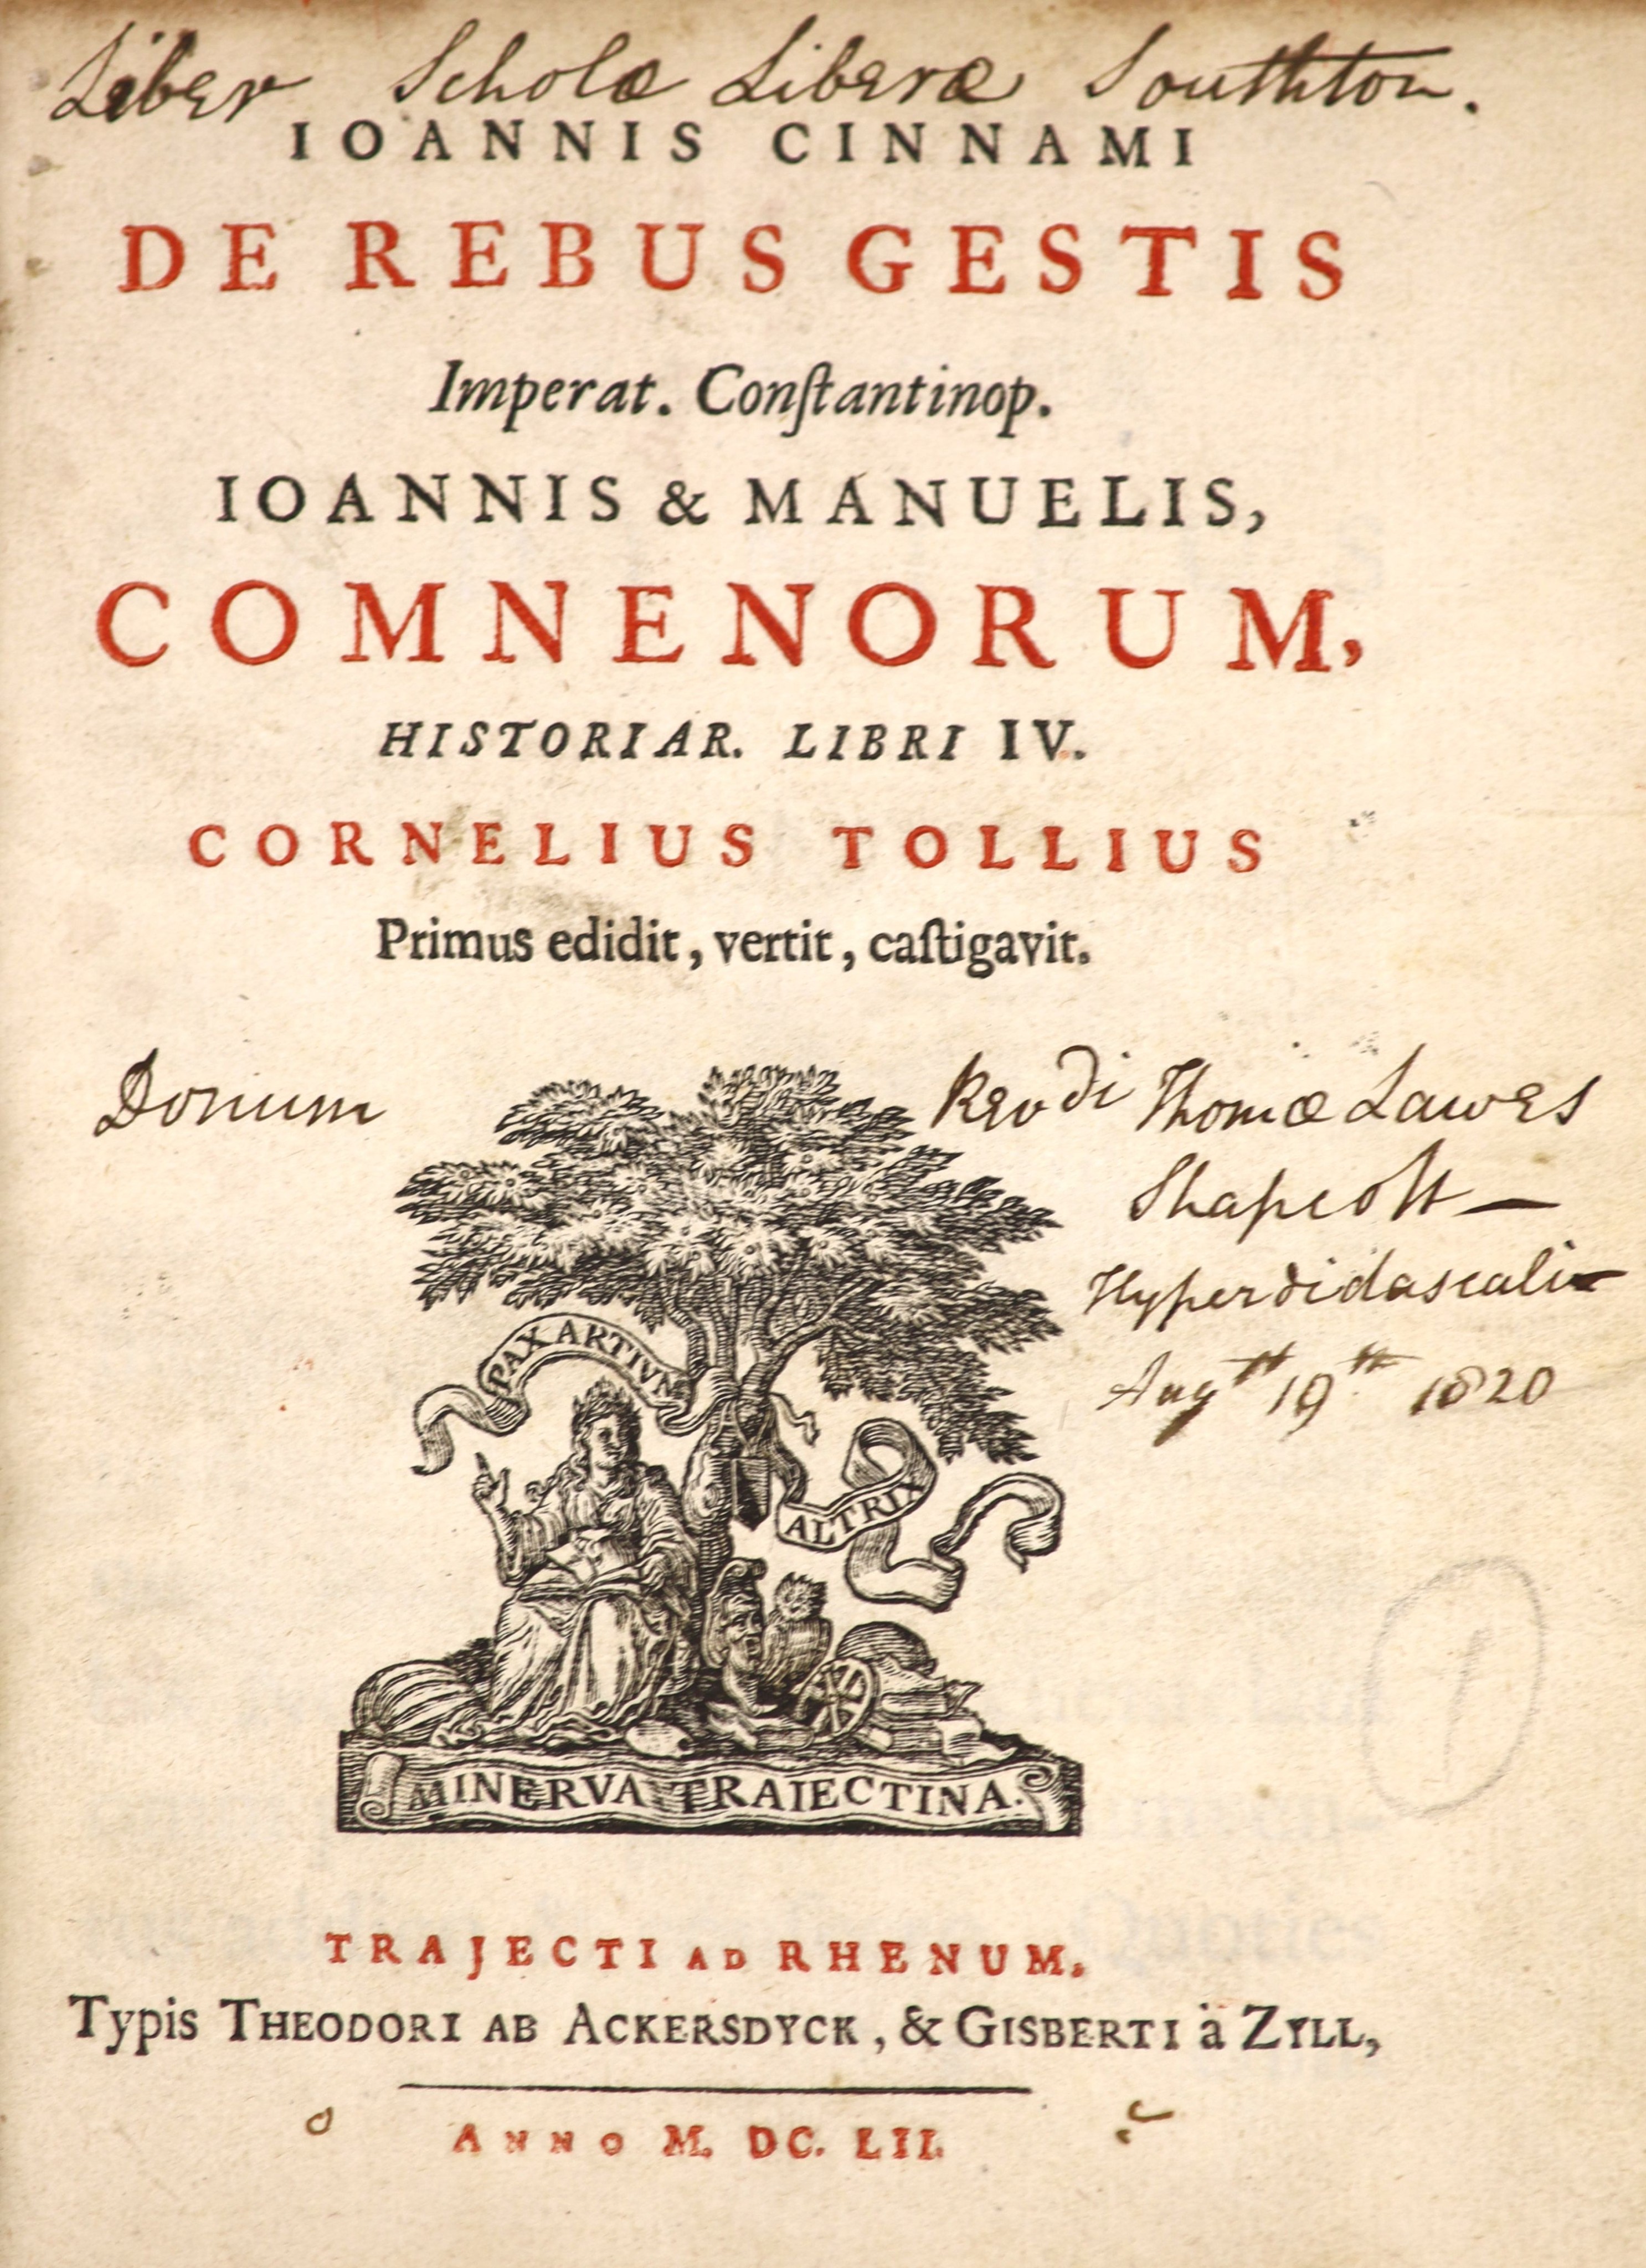 Cinnamus, Johannes - De Rebus Gestis ... Comnenorum, Historiar. Libri IV. recently rebound half calf and cloth, sm.4to. Utrecht, 1652